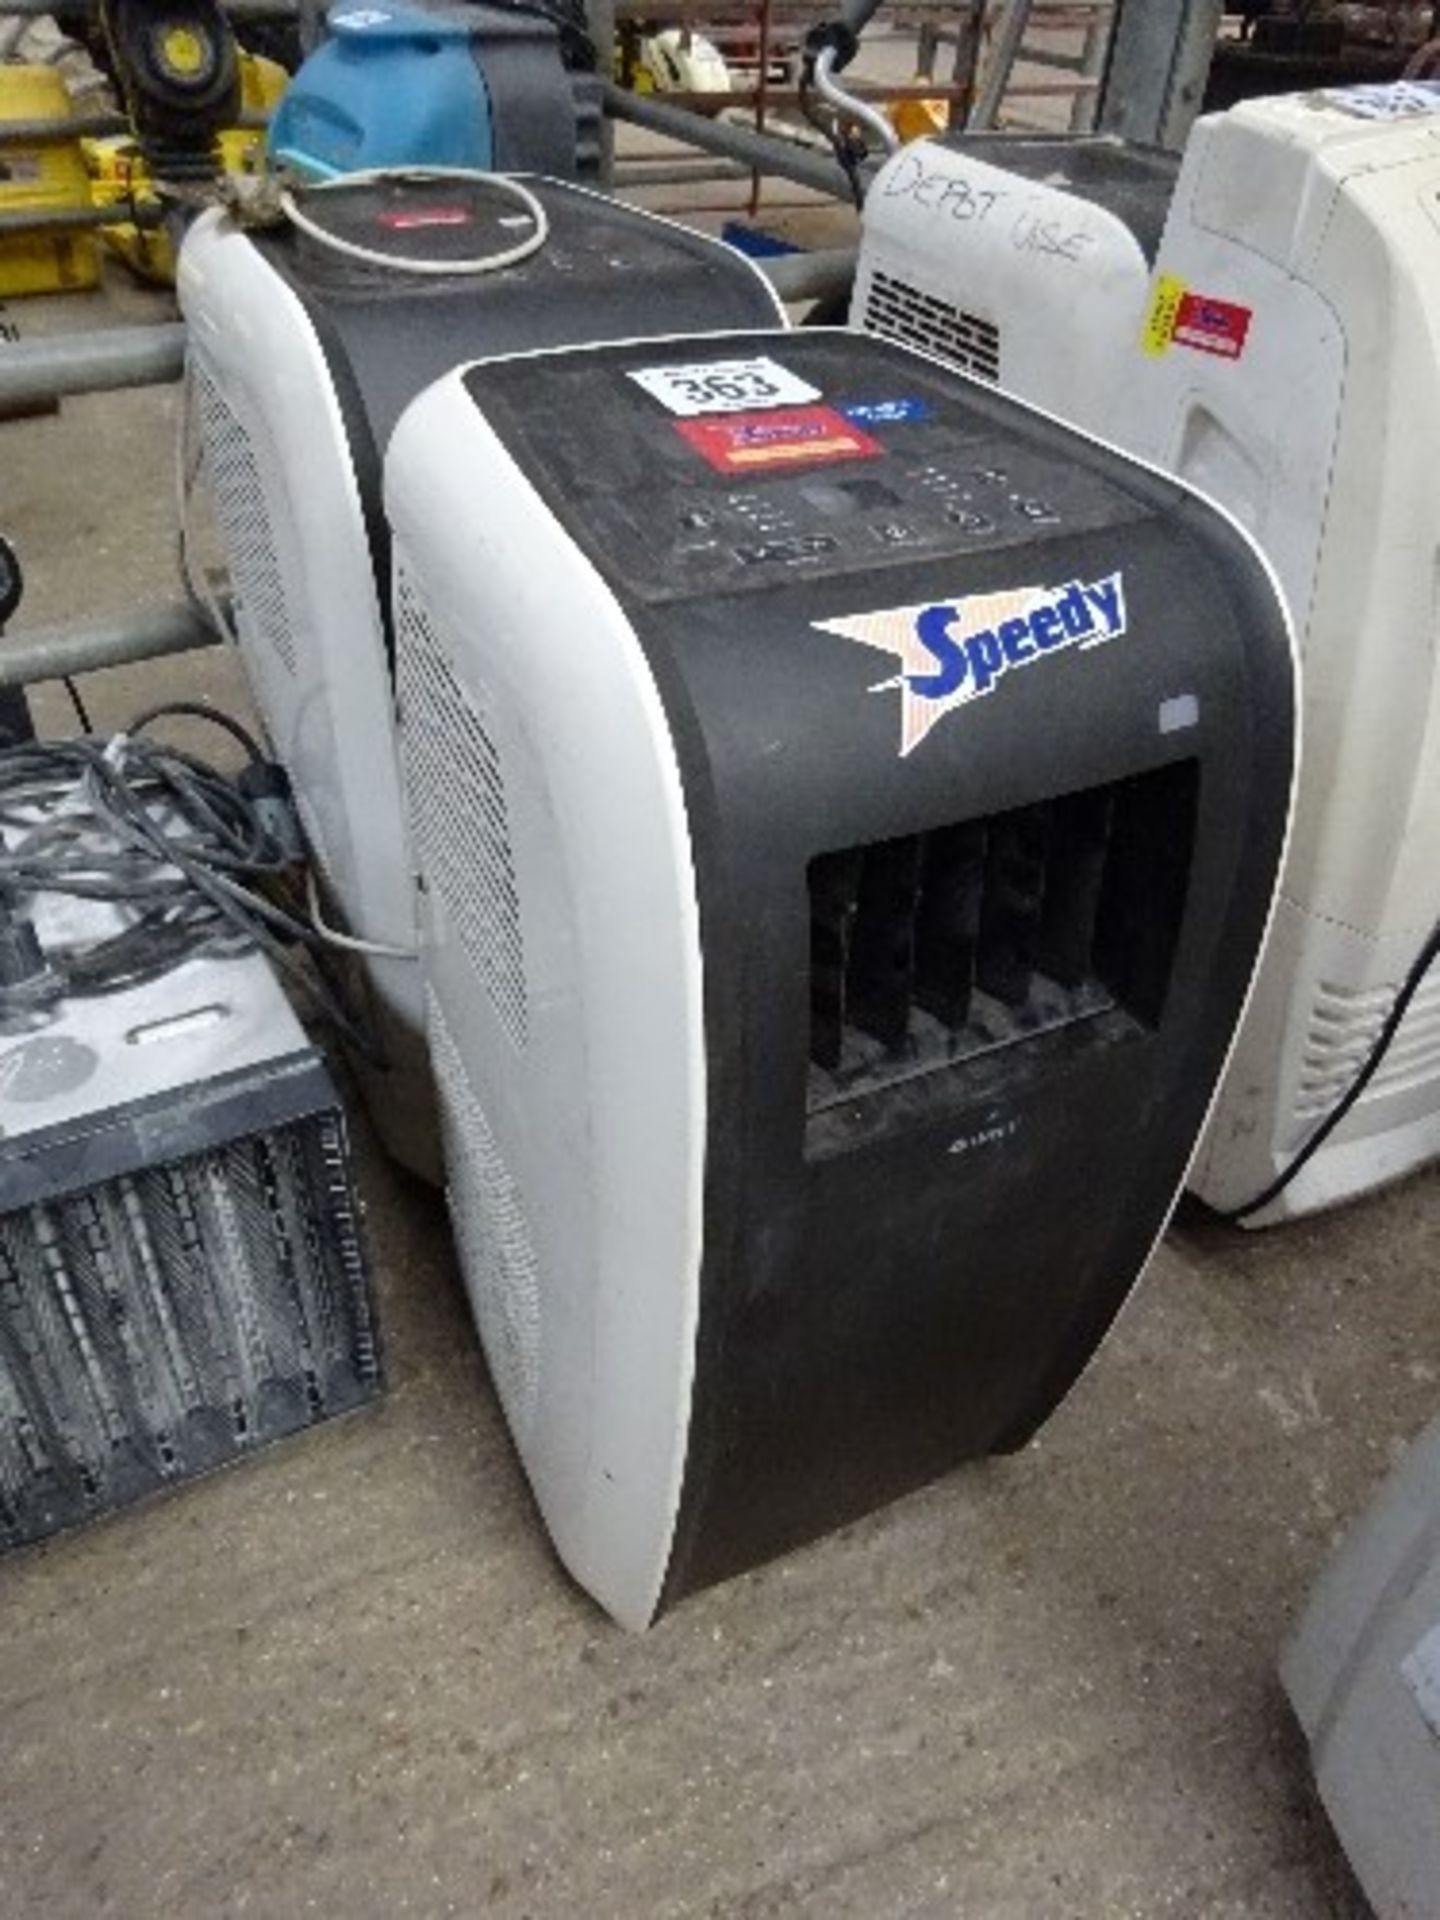 2 Gree air conditioning units 240v